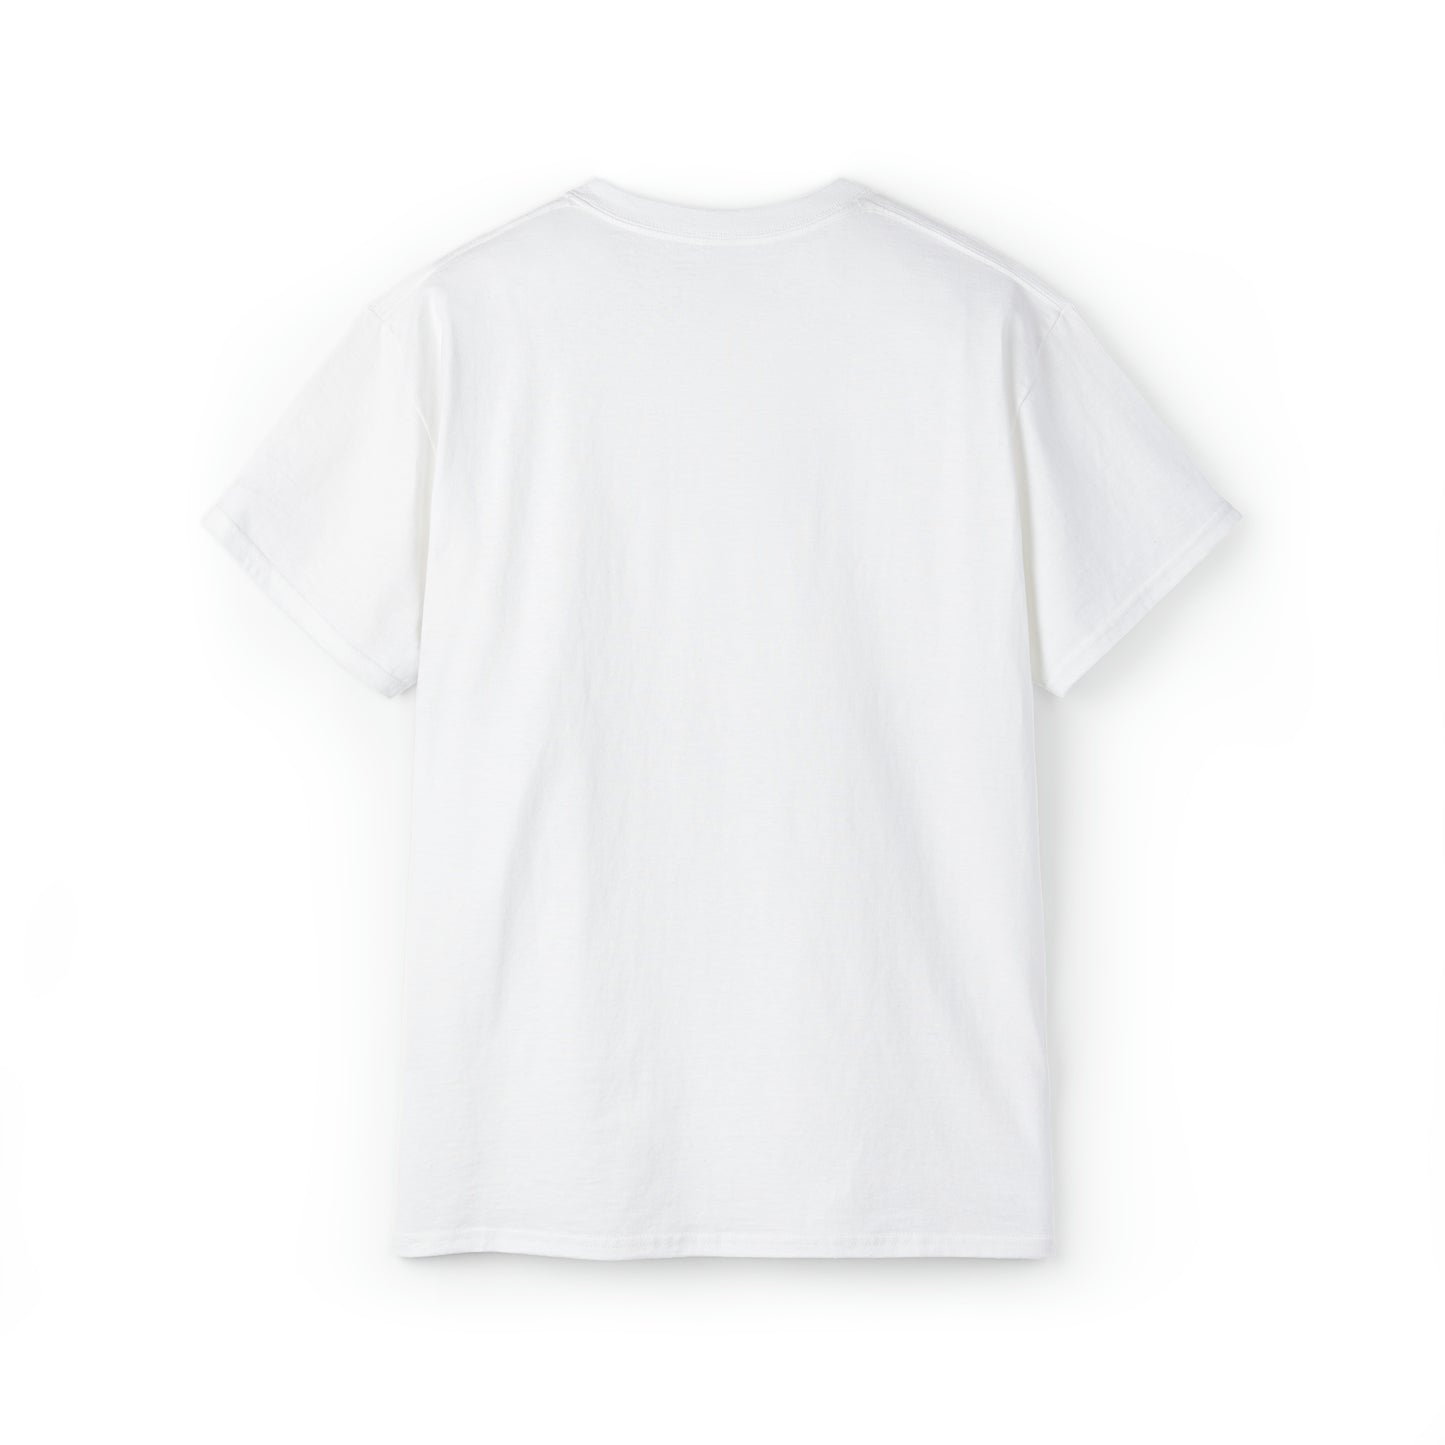 Meridiana - Unisex T-Shirt